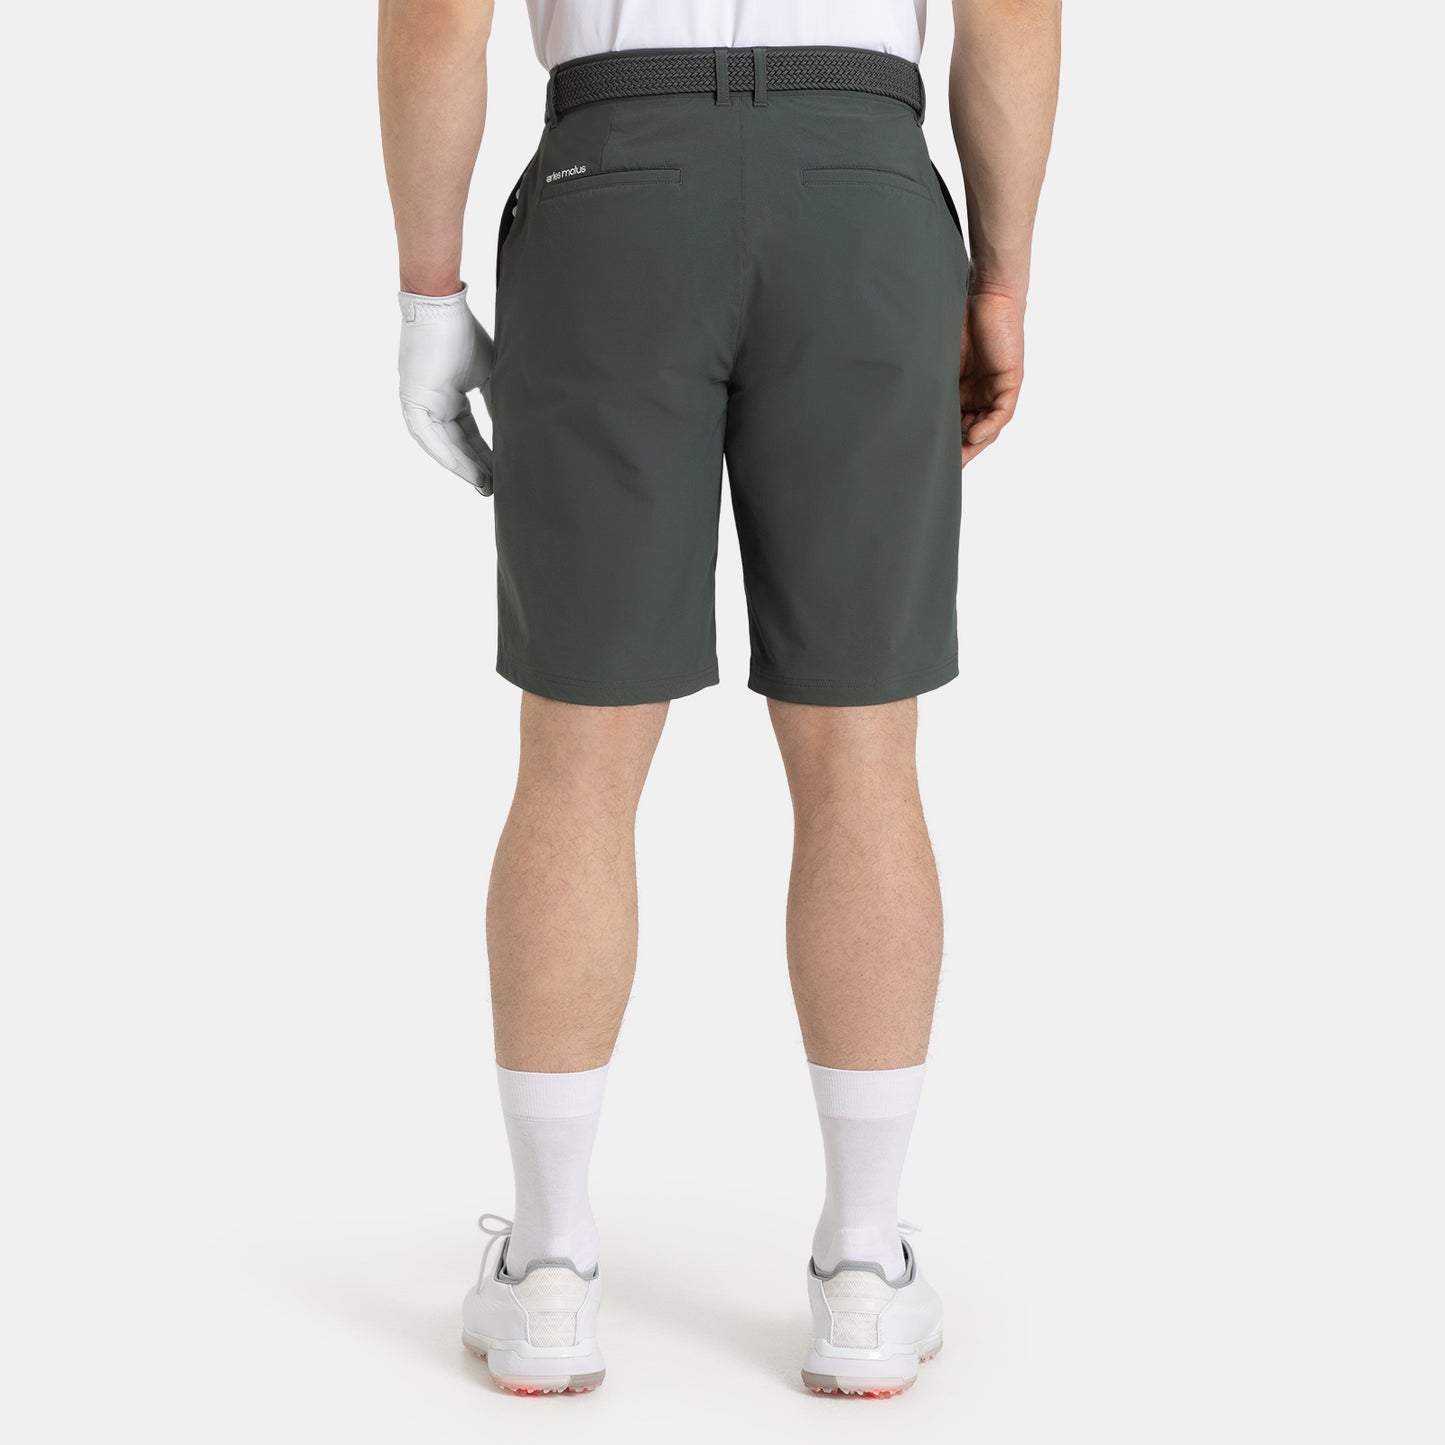 Men's Shorts "Phil"